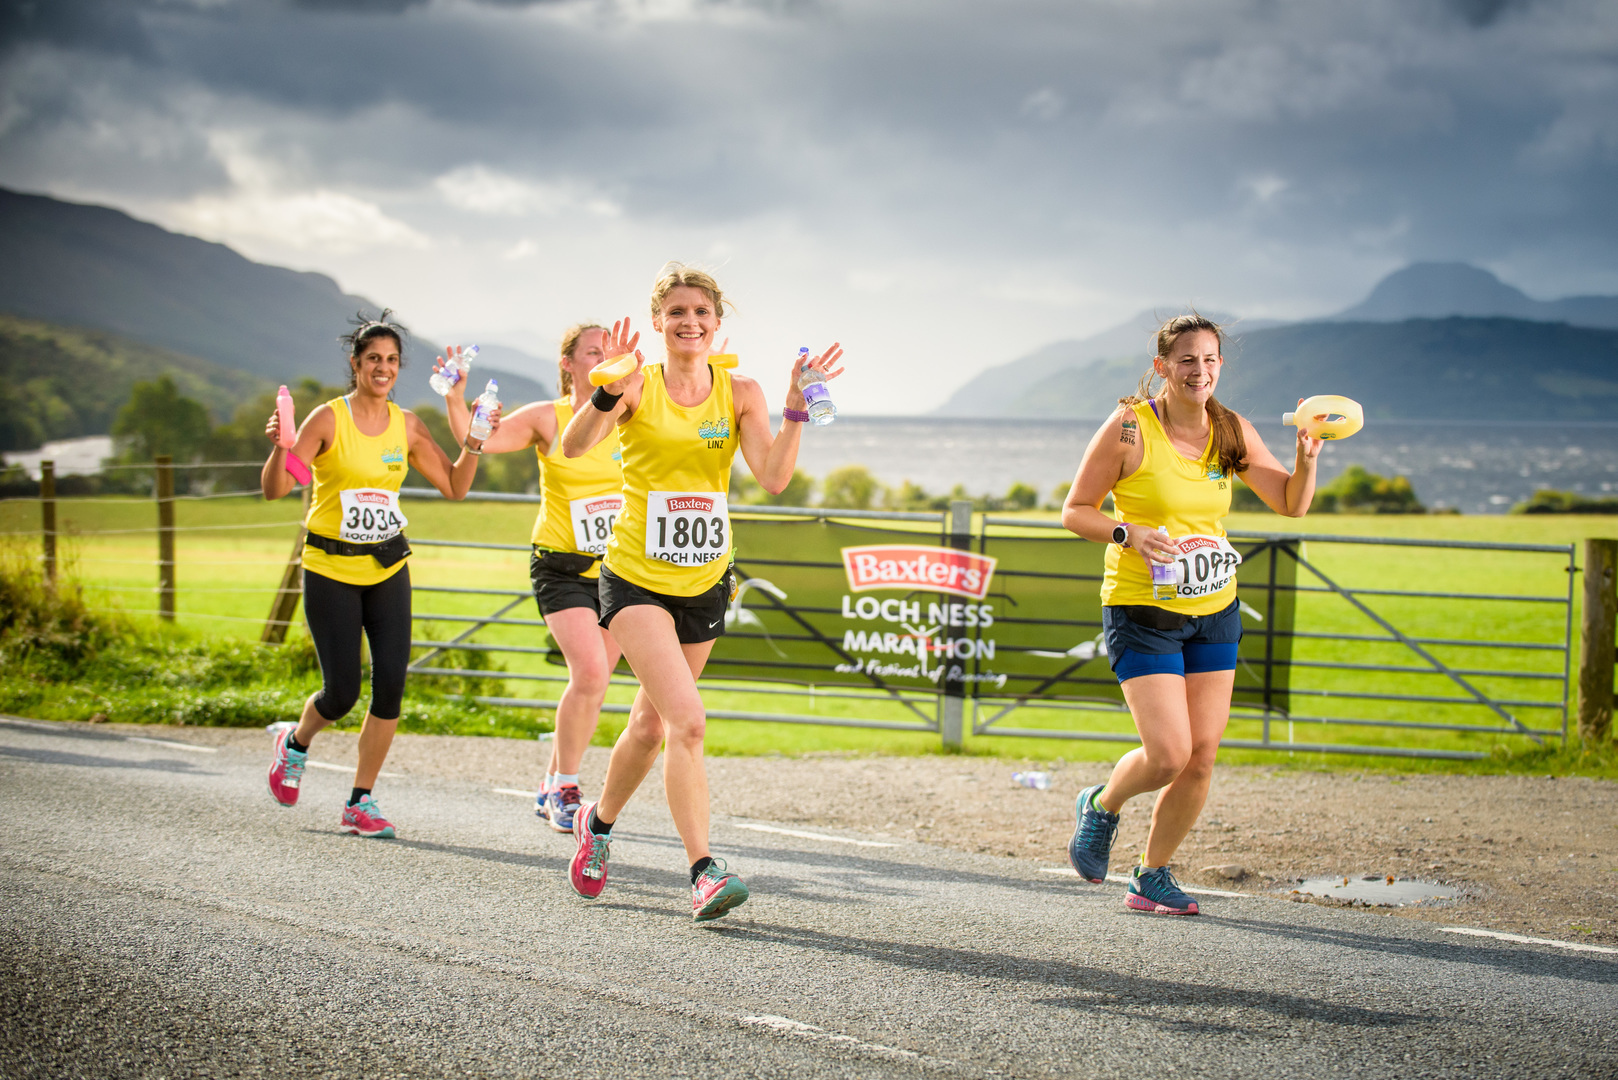 Baxters Loch Ness Marathon, Scotland, October 2022, Highland Council, Scotland, United Kingdom